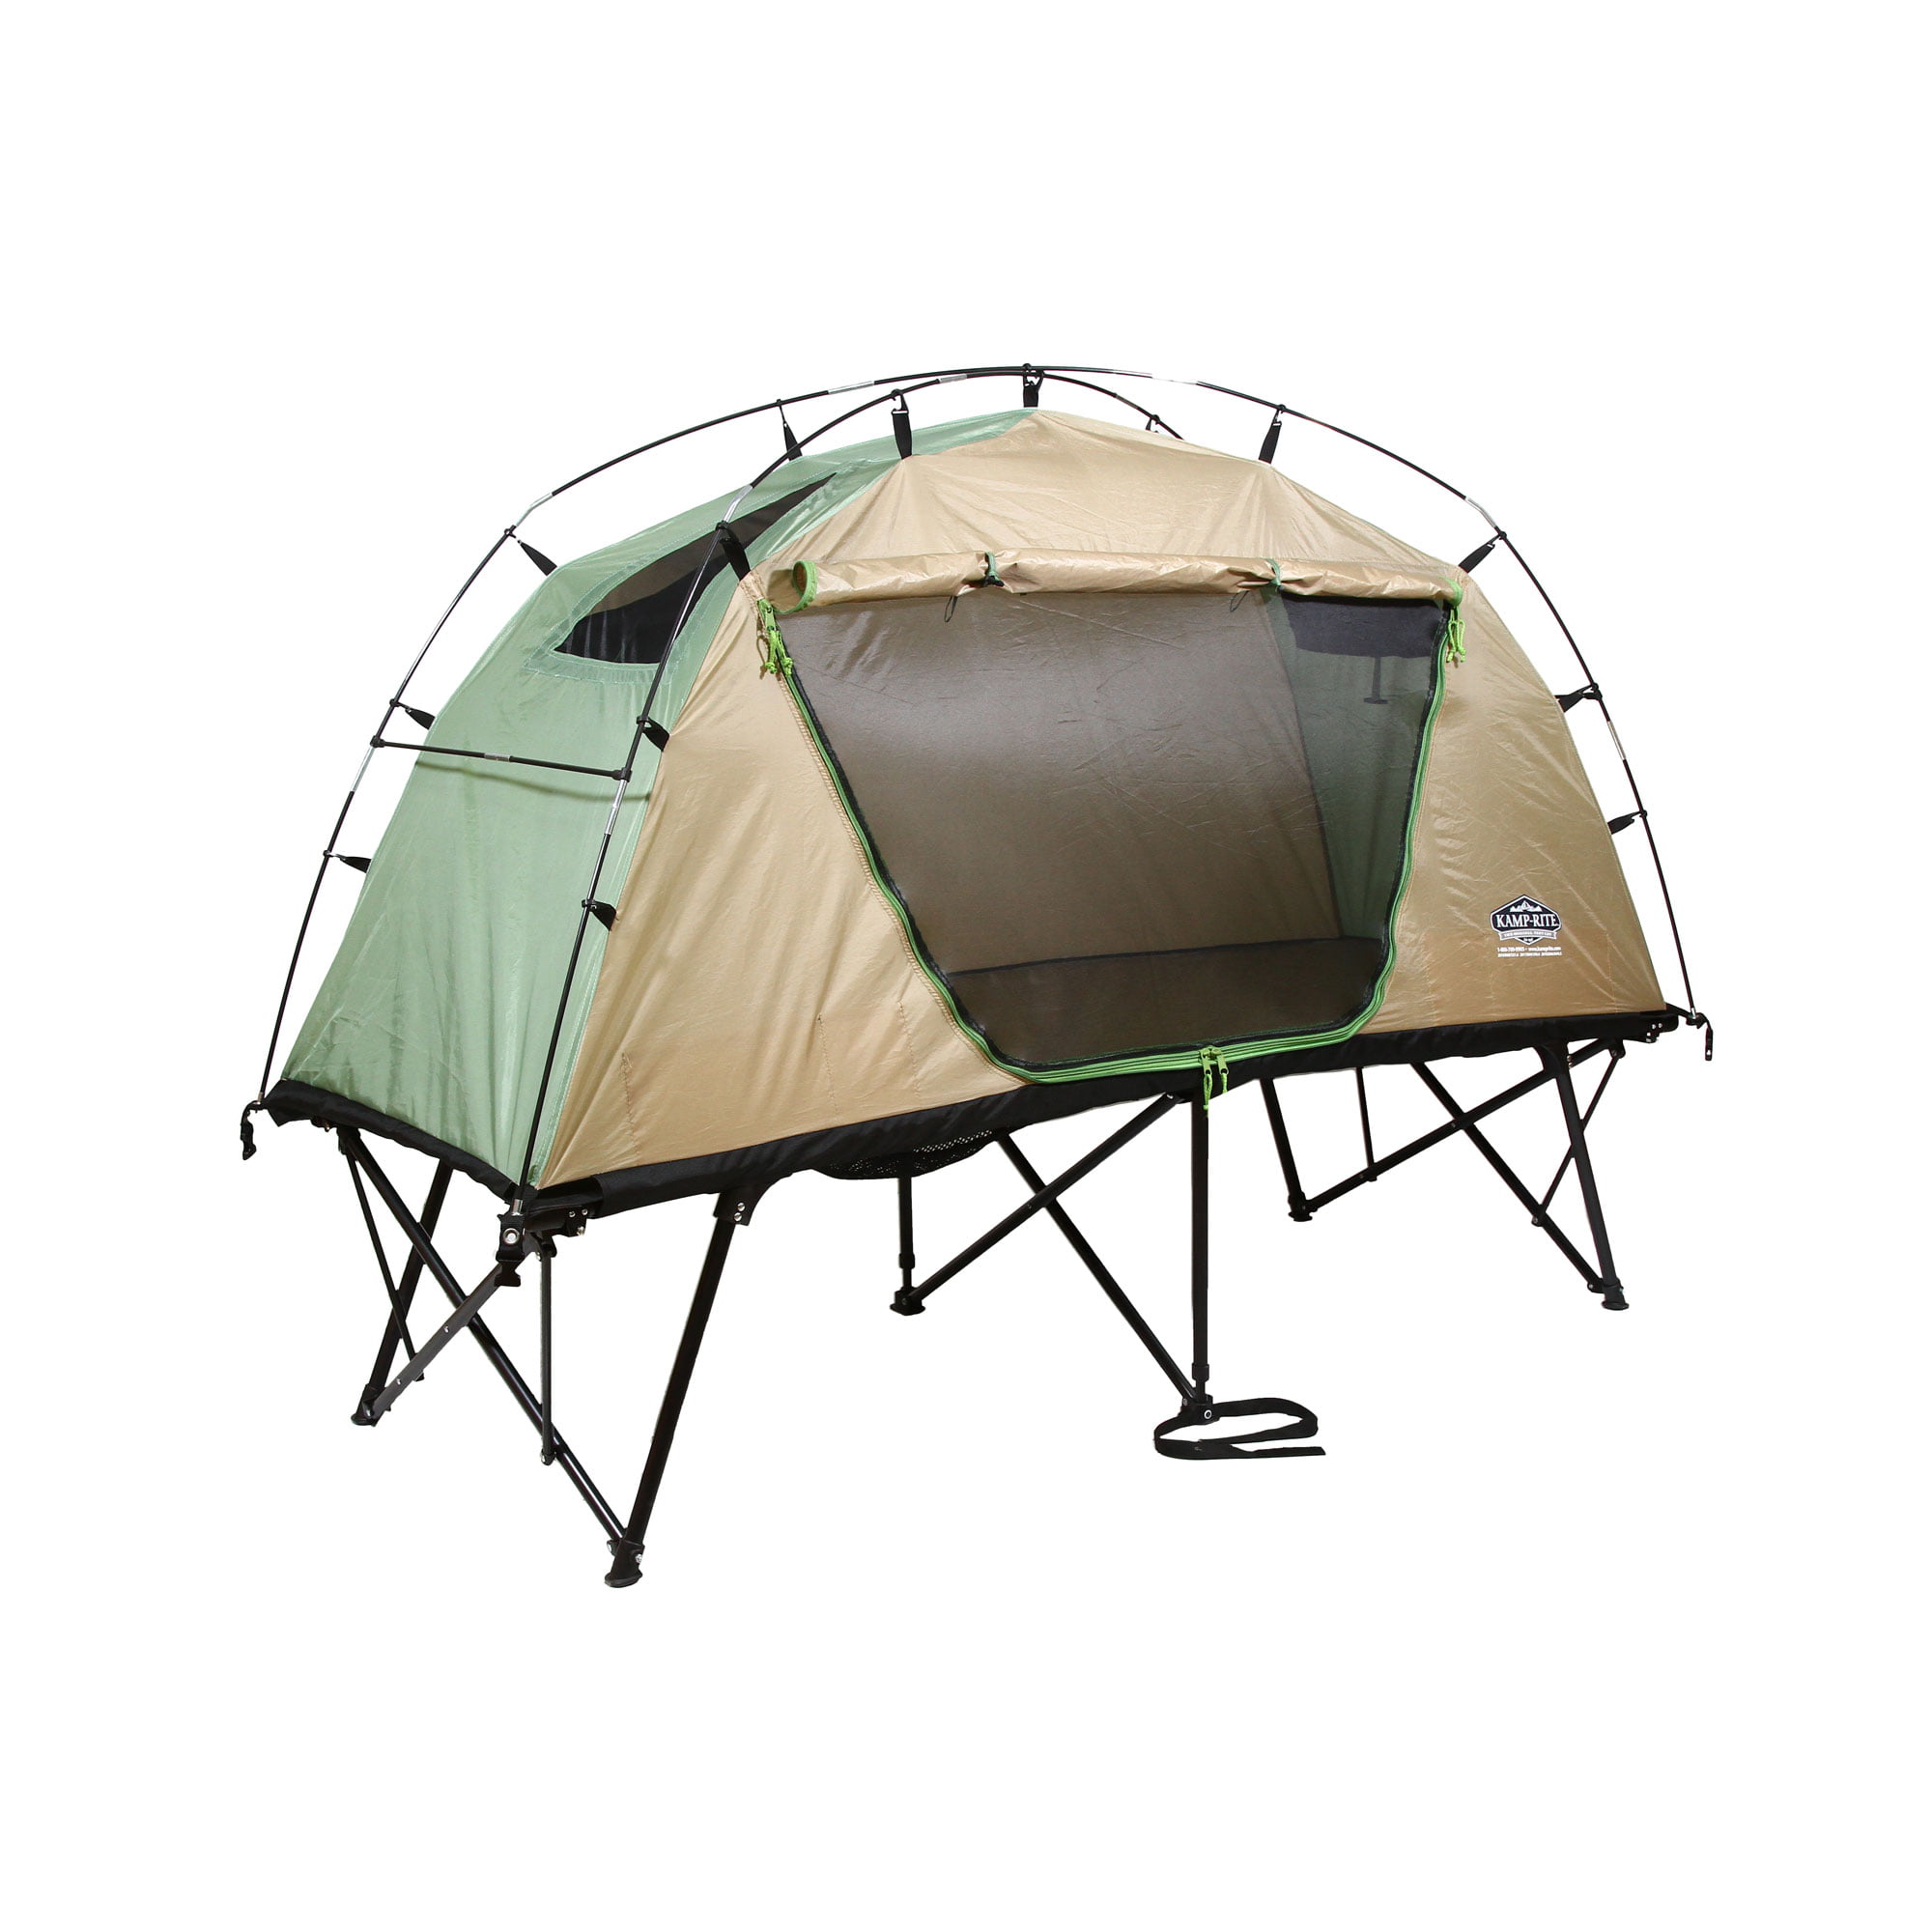 Kamp-Rite CTC Standard Compact Collapsible Camping Tent Cot, Tan